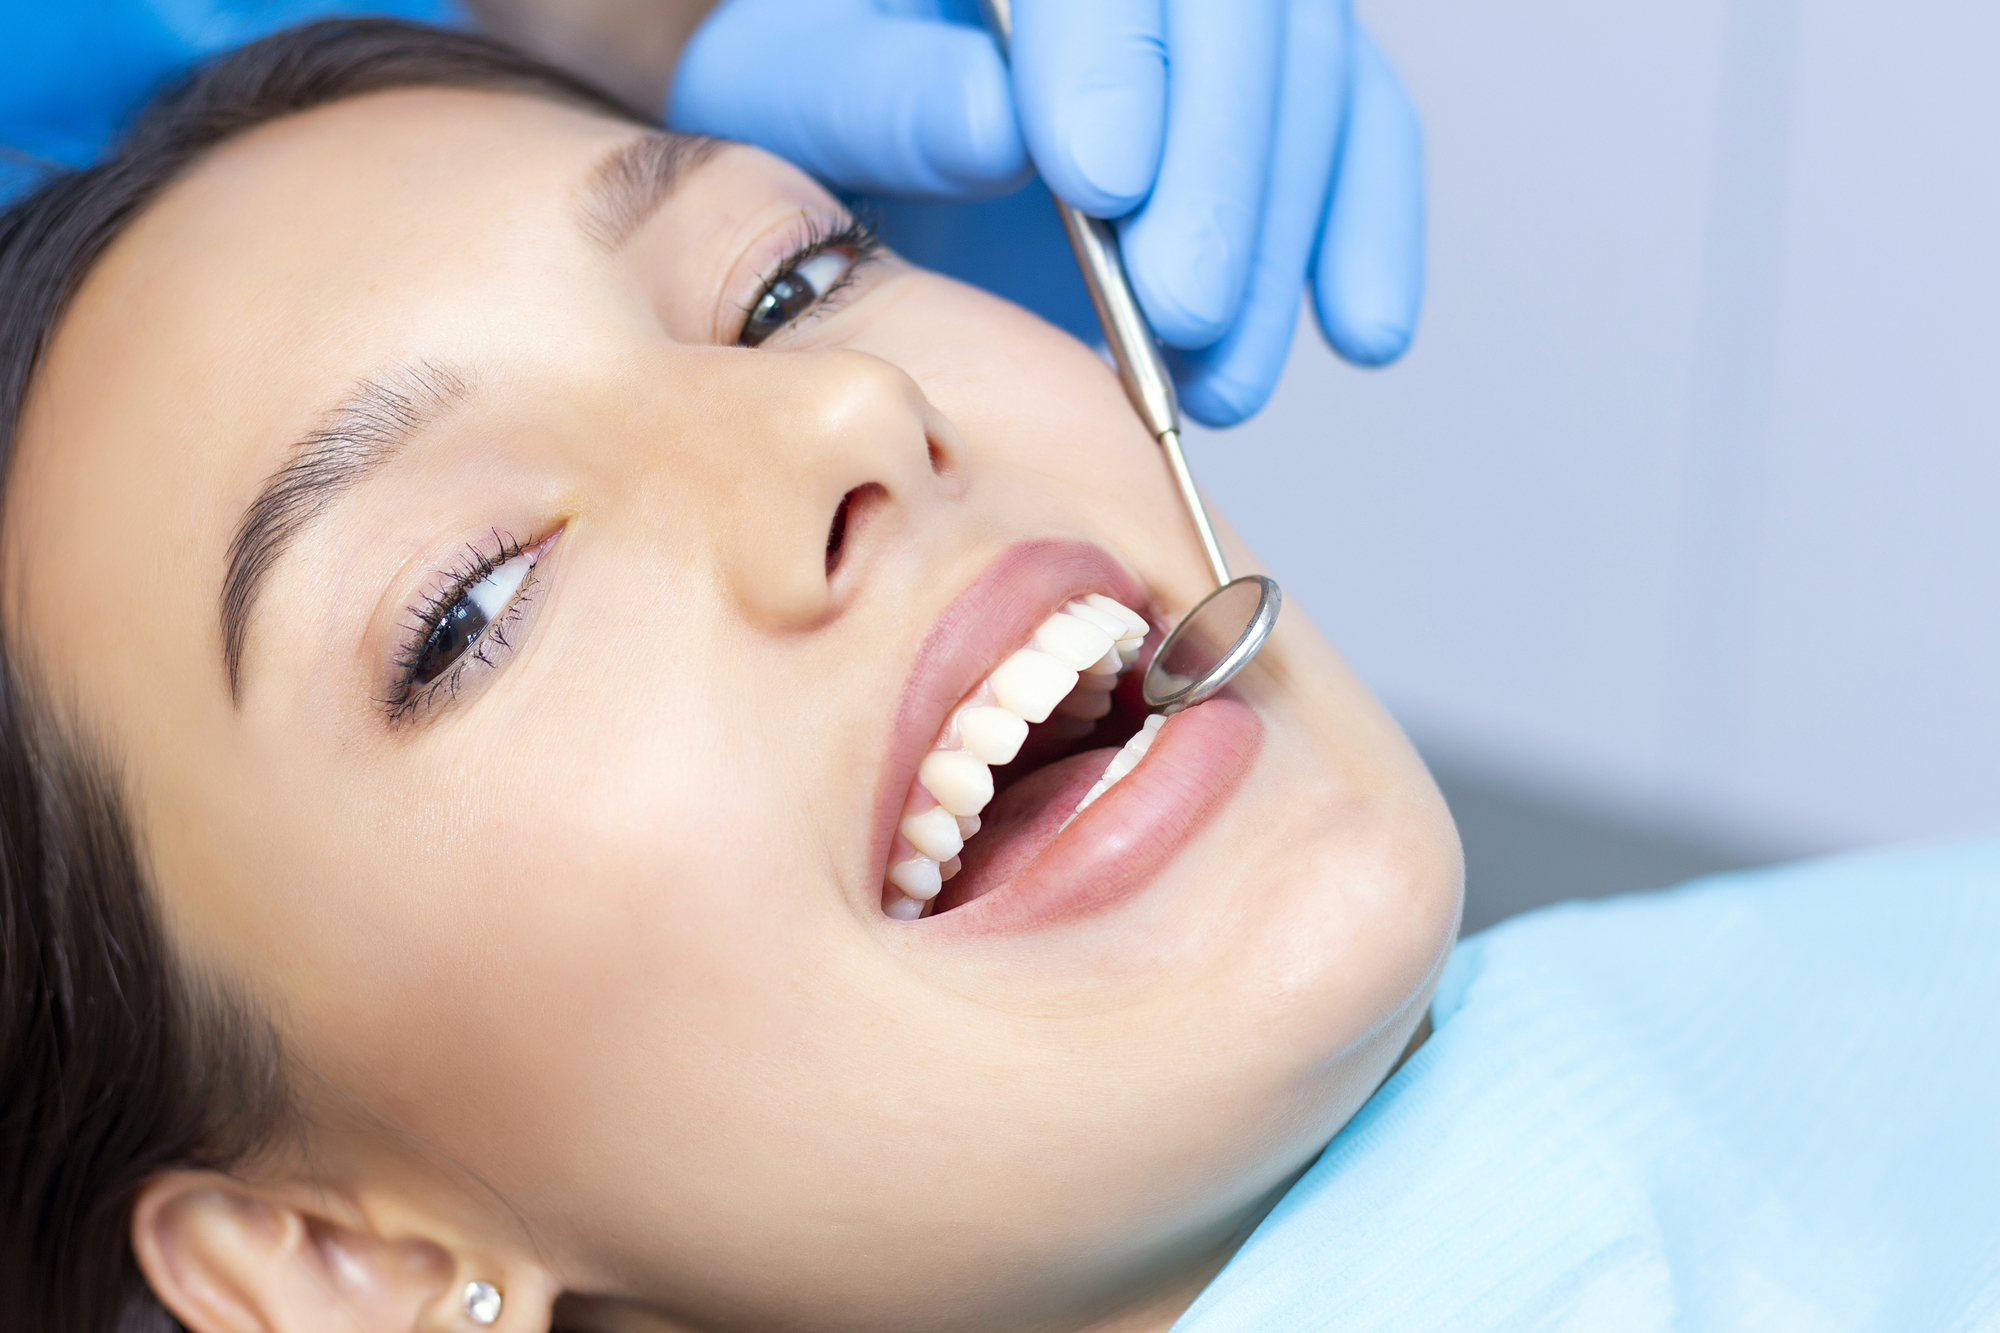 dentist in Las Vegas examines the patients teeth